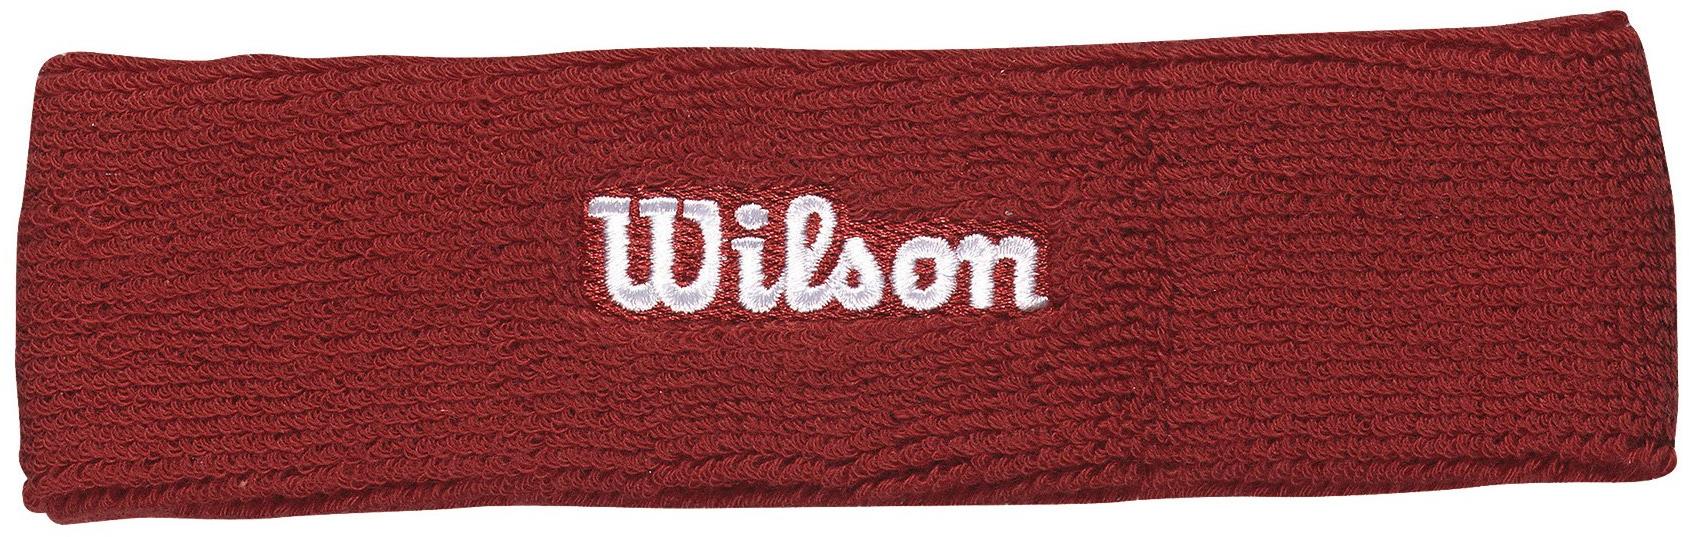 Wilson Headband